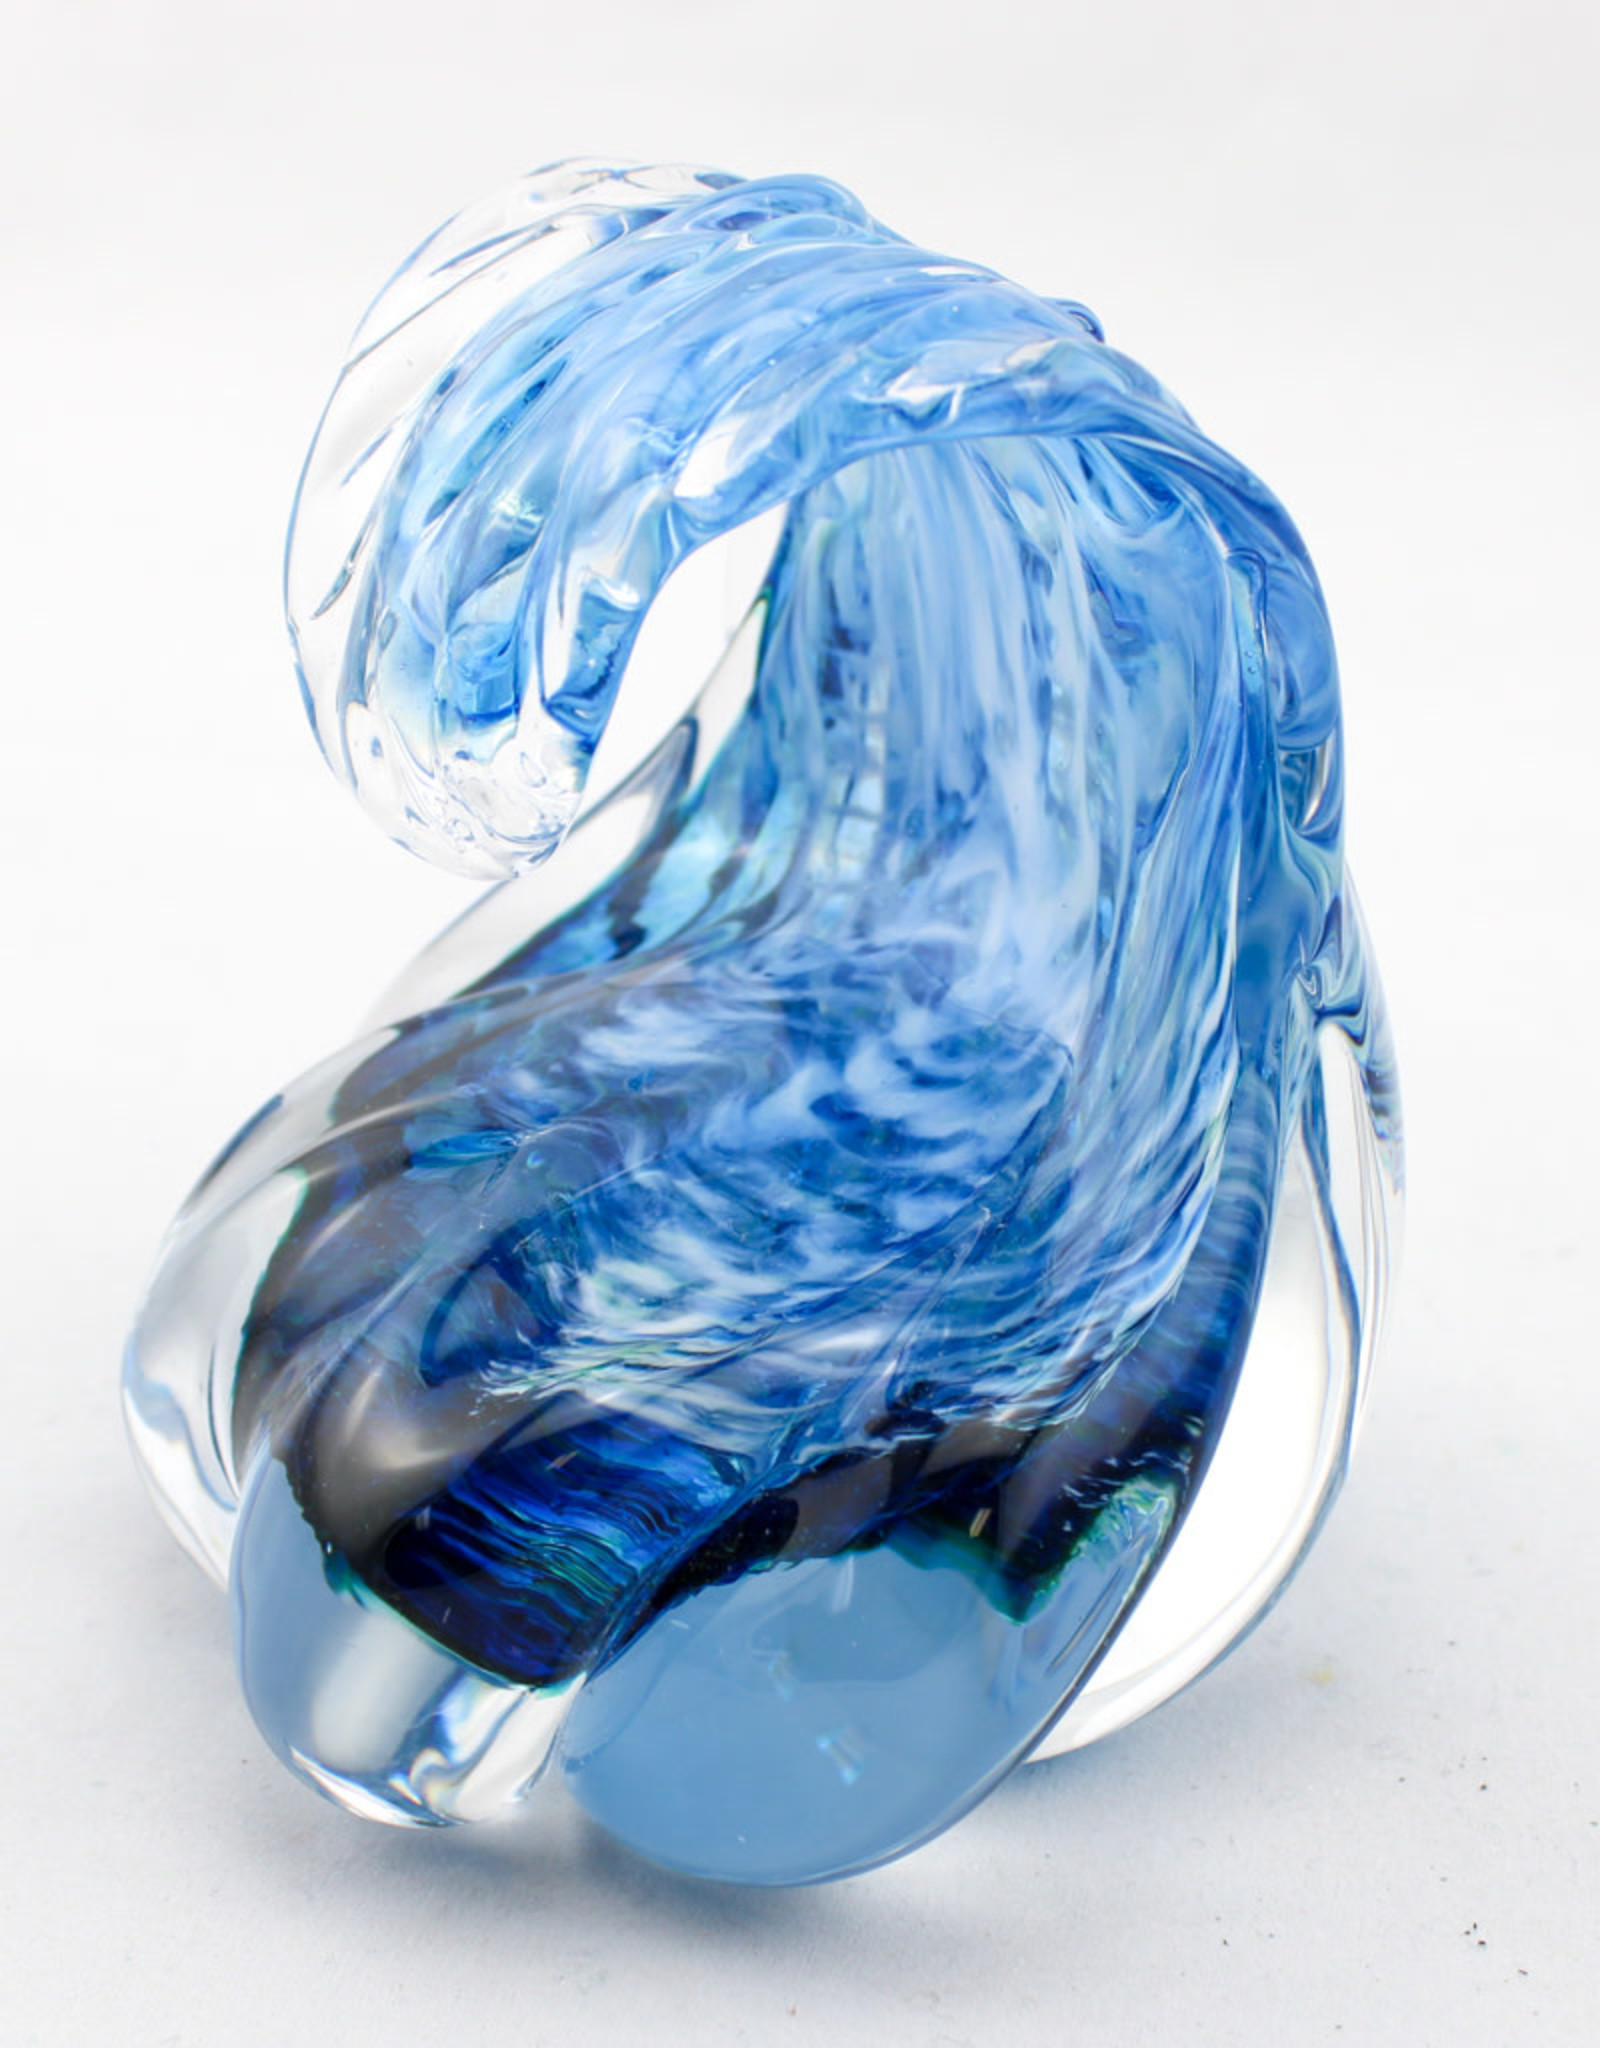 Anchor Bend Glassworks, LLC Glass Wave Scupture - Large